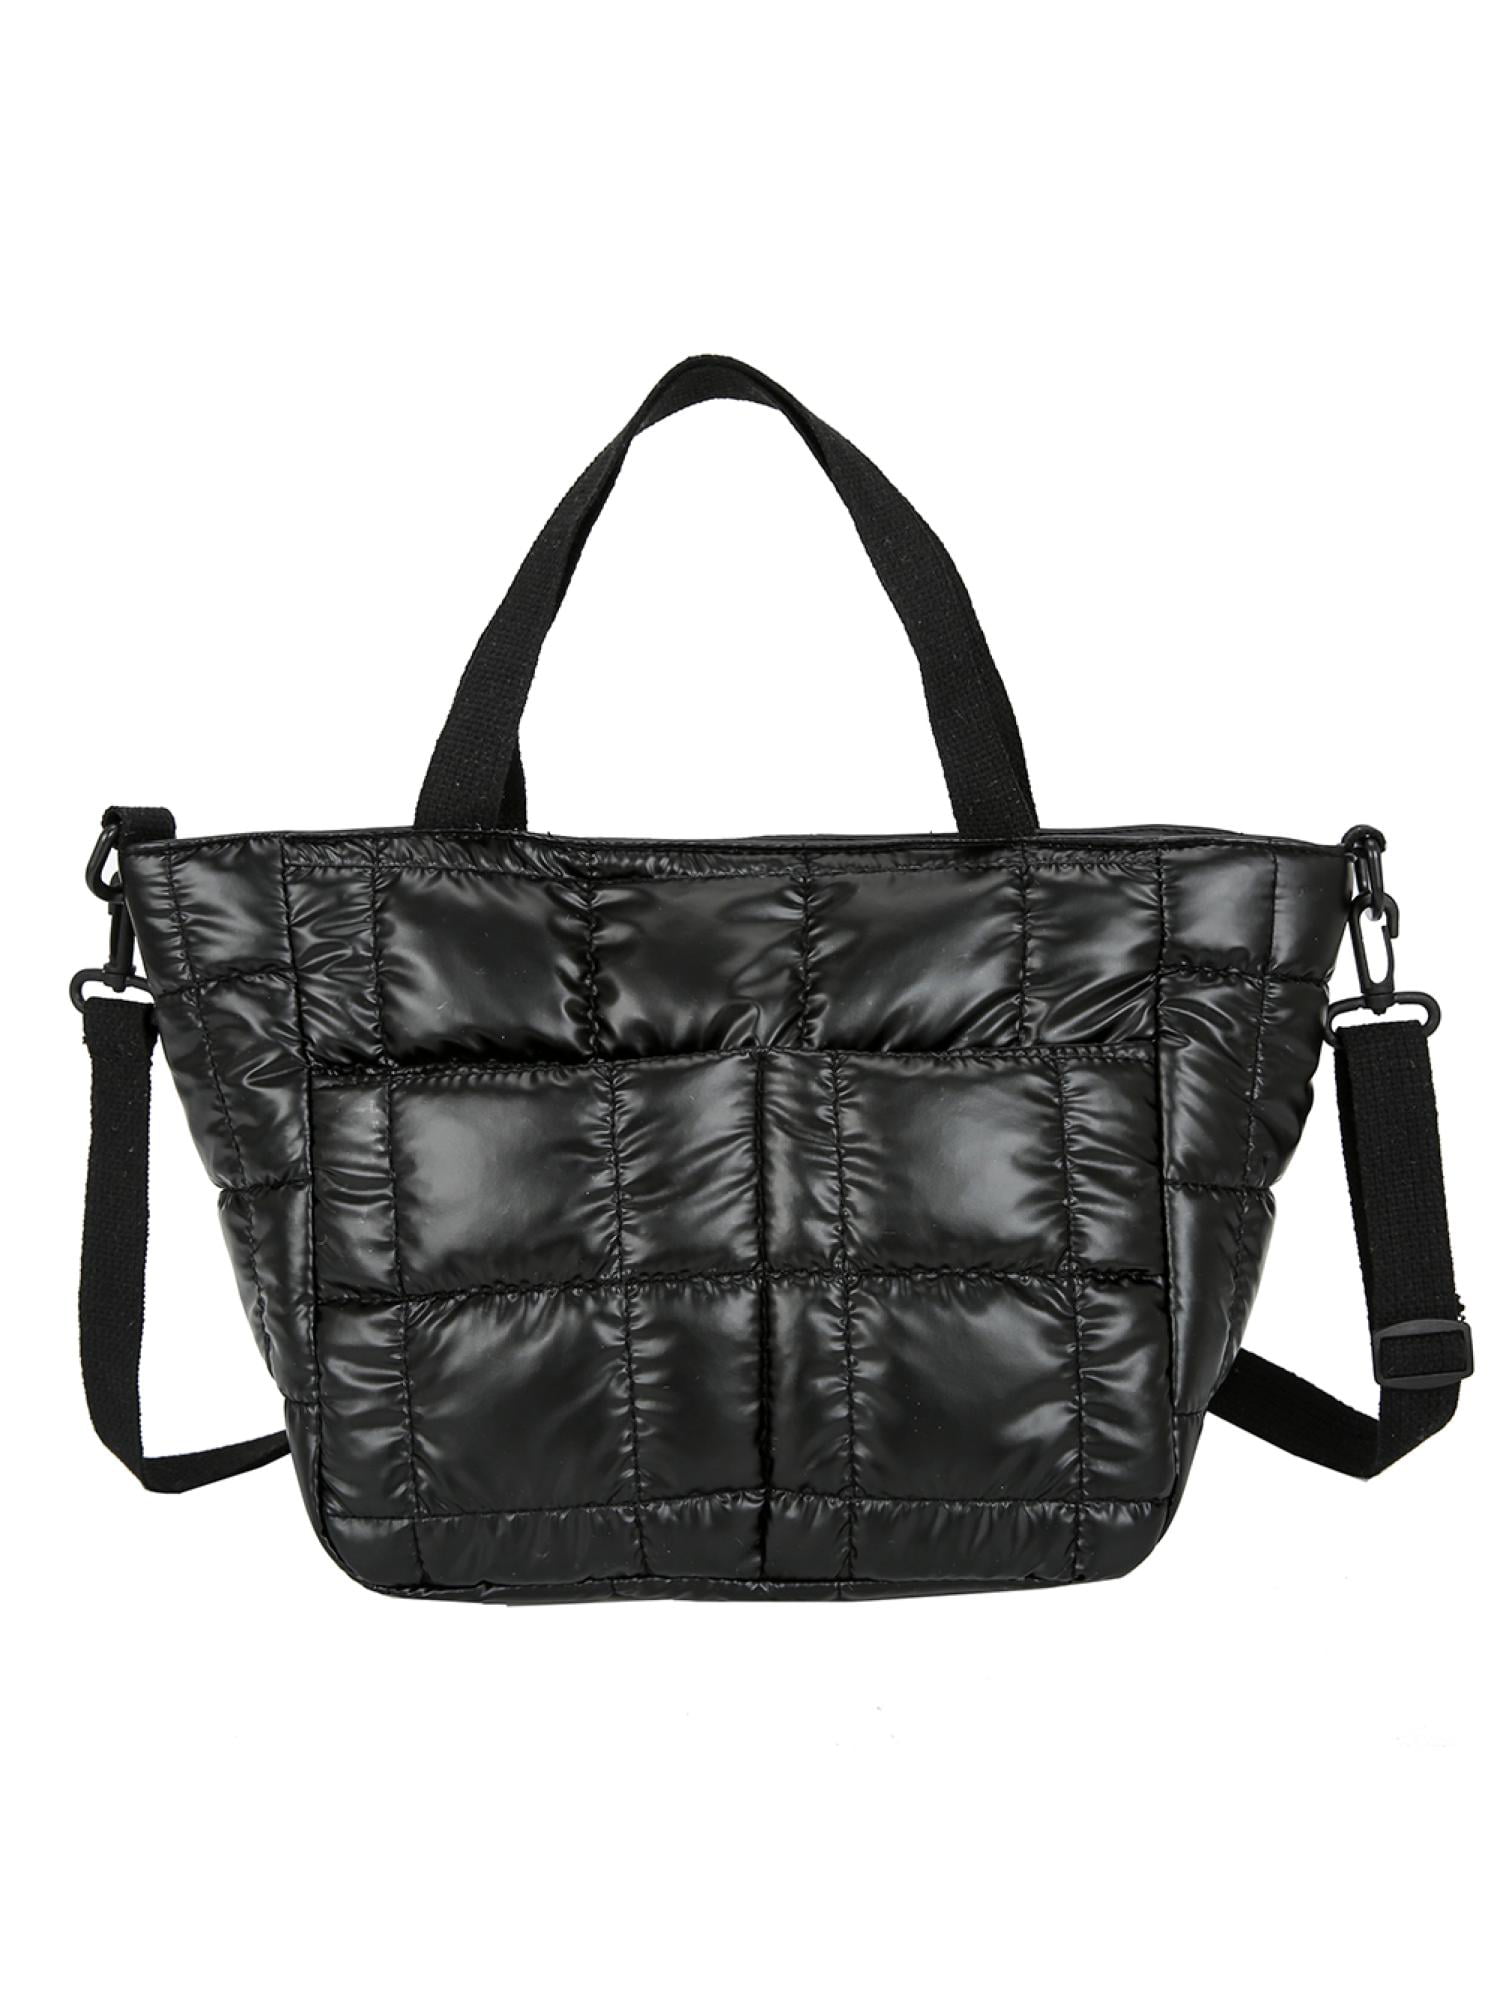 Bxingsftys Women Lattice Quilted Shoulder Bags Female Shopping Bag Large  Nylon Tote Handbag 